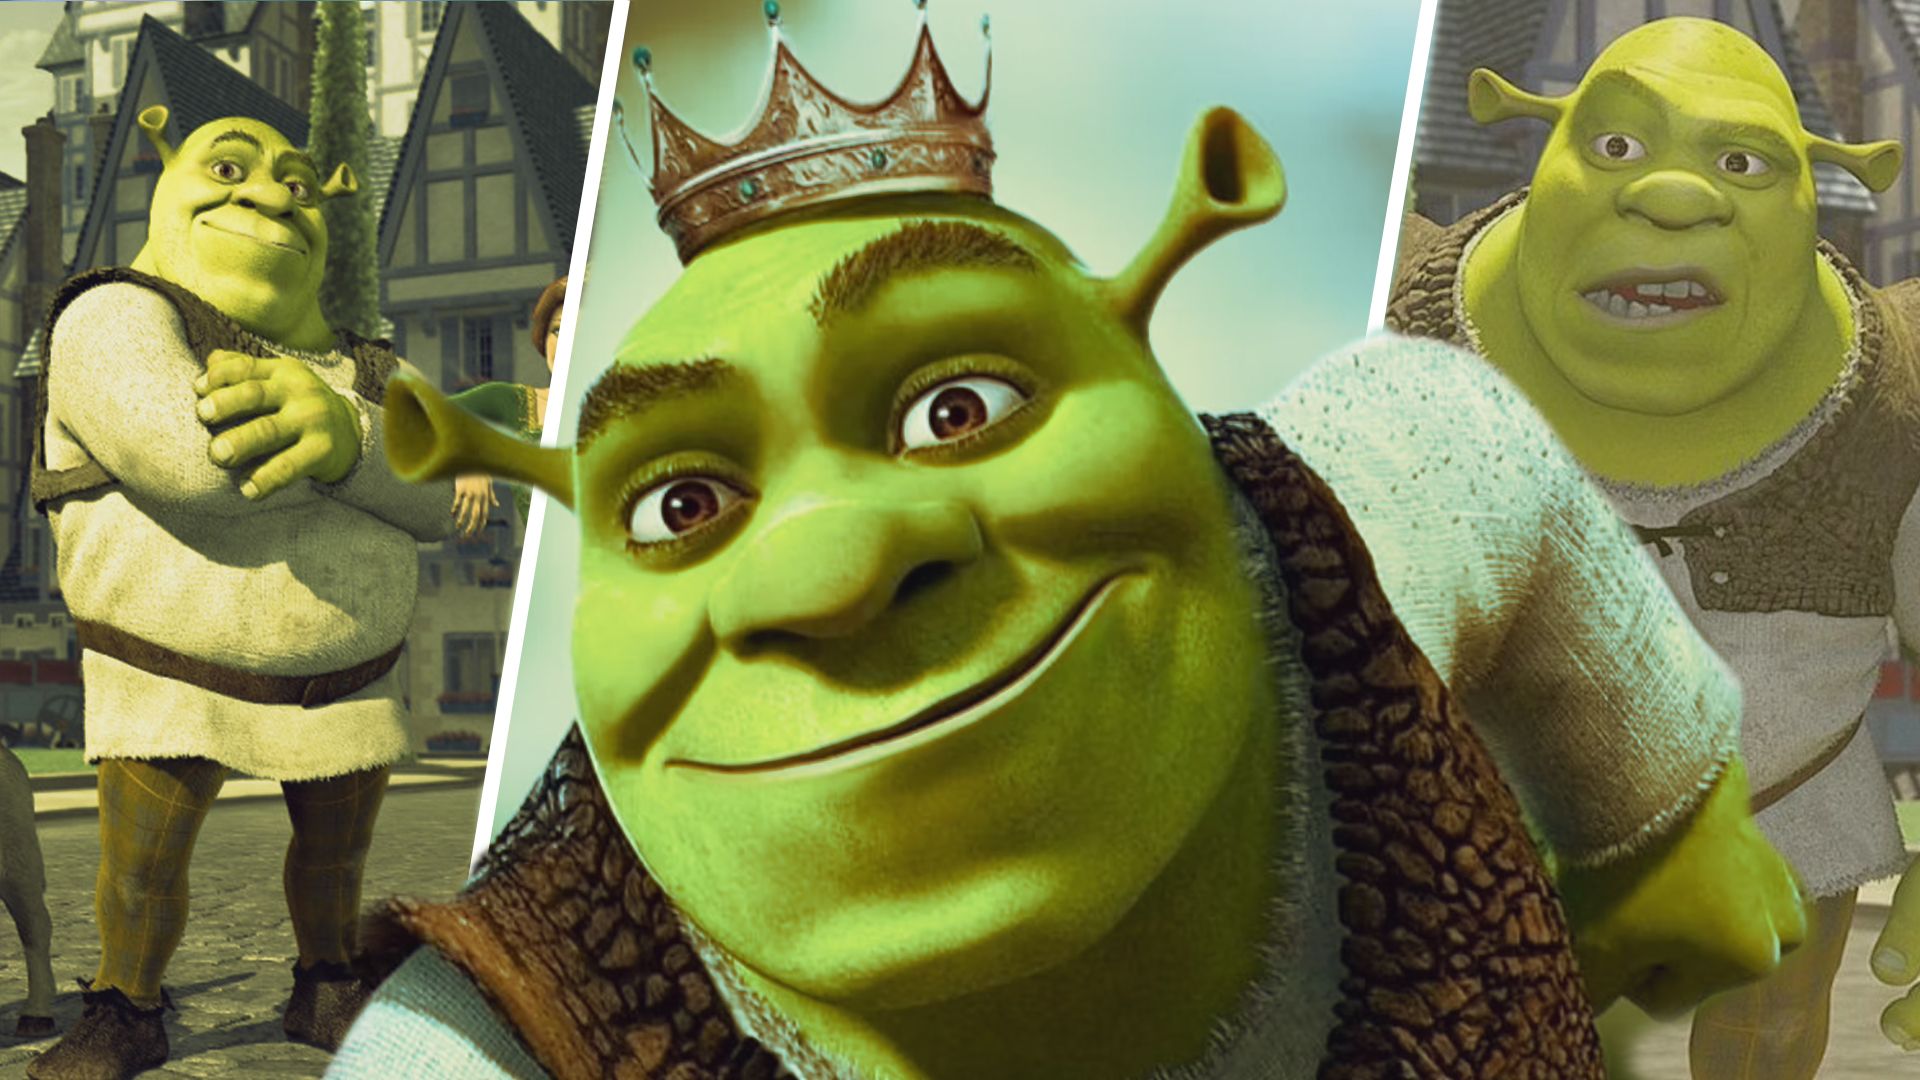 A custom image of Shrek